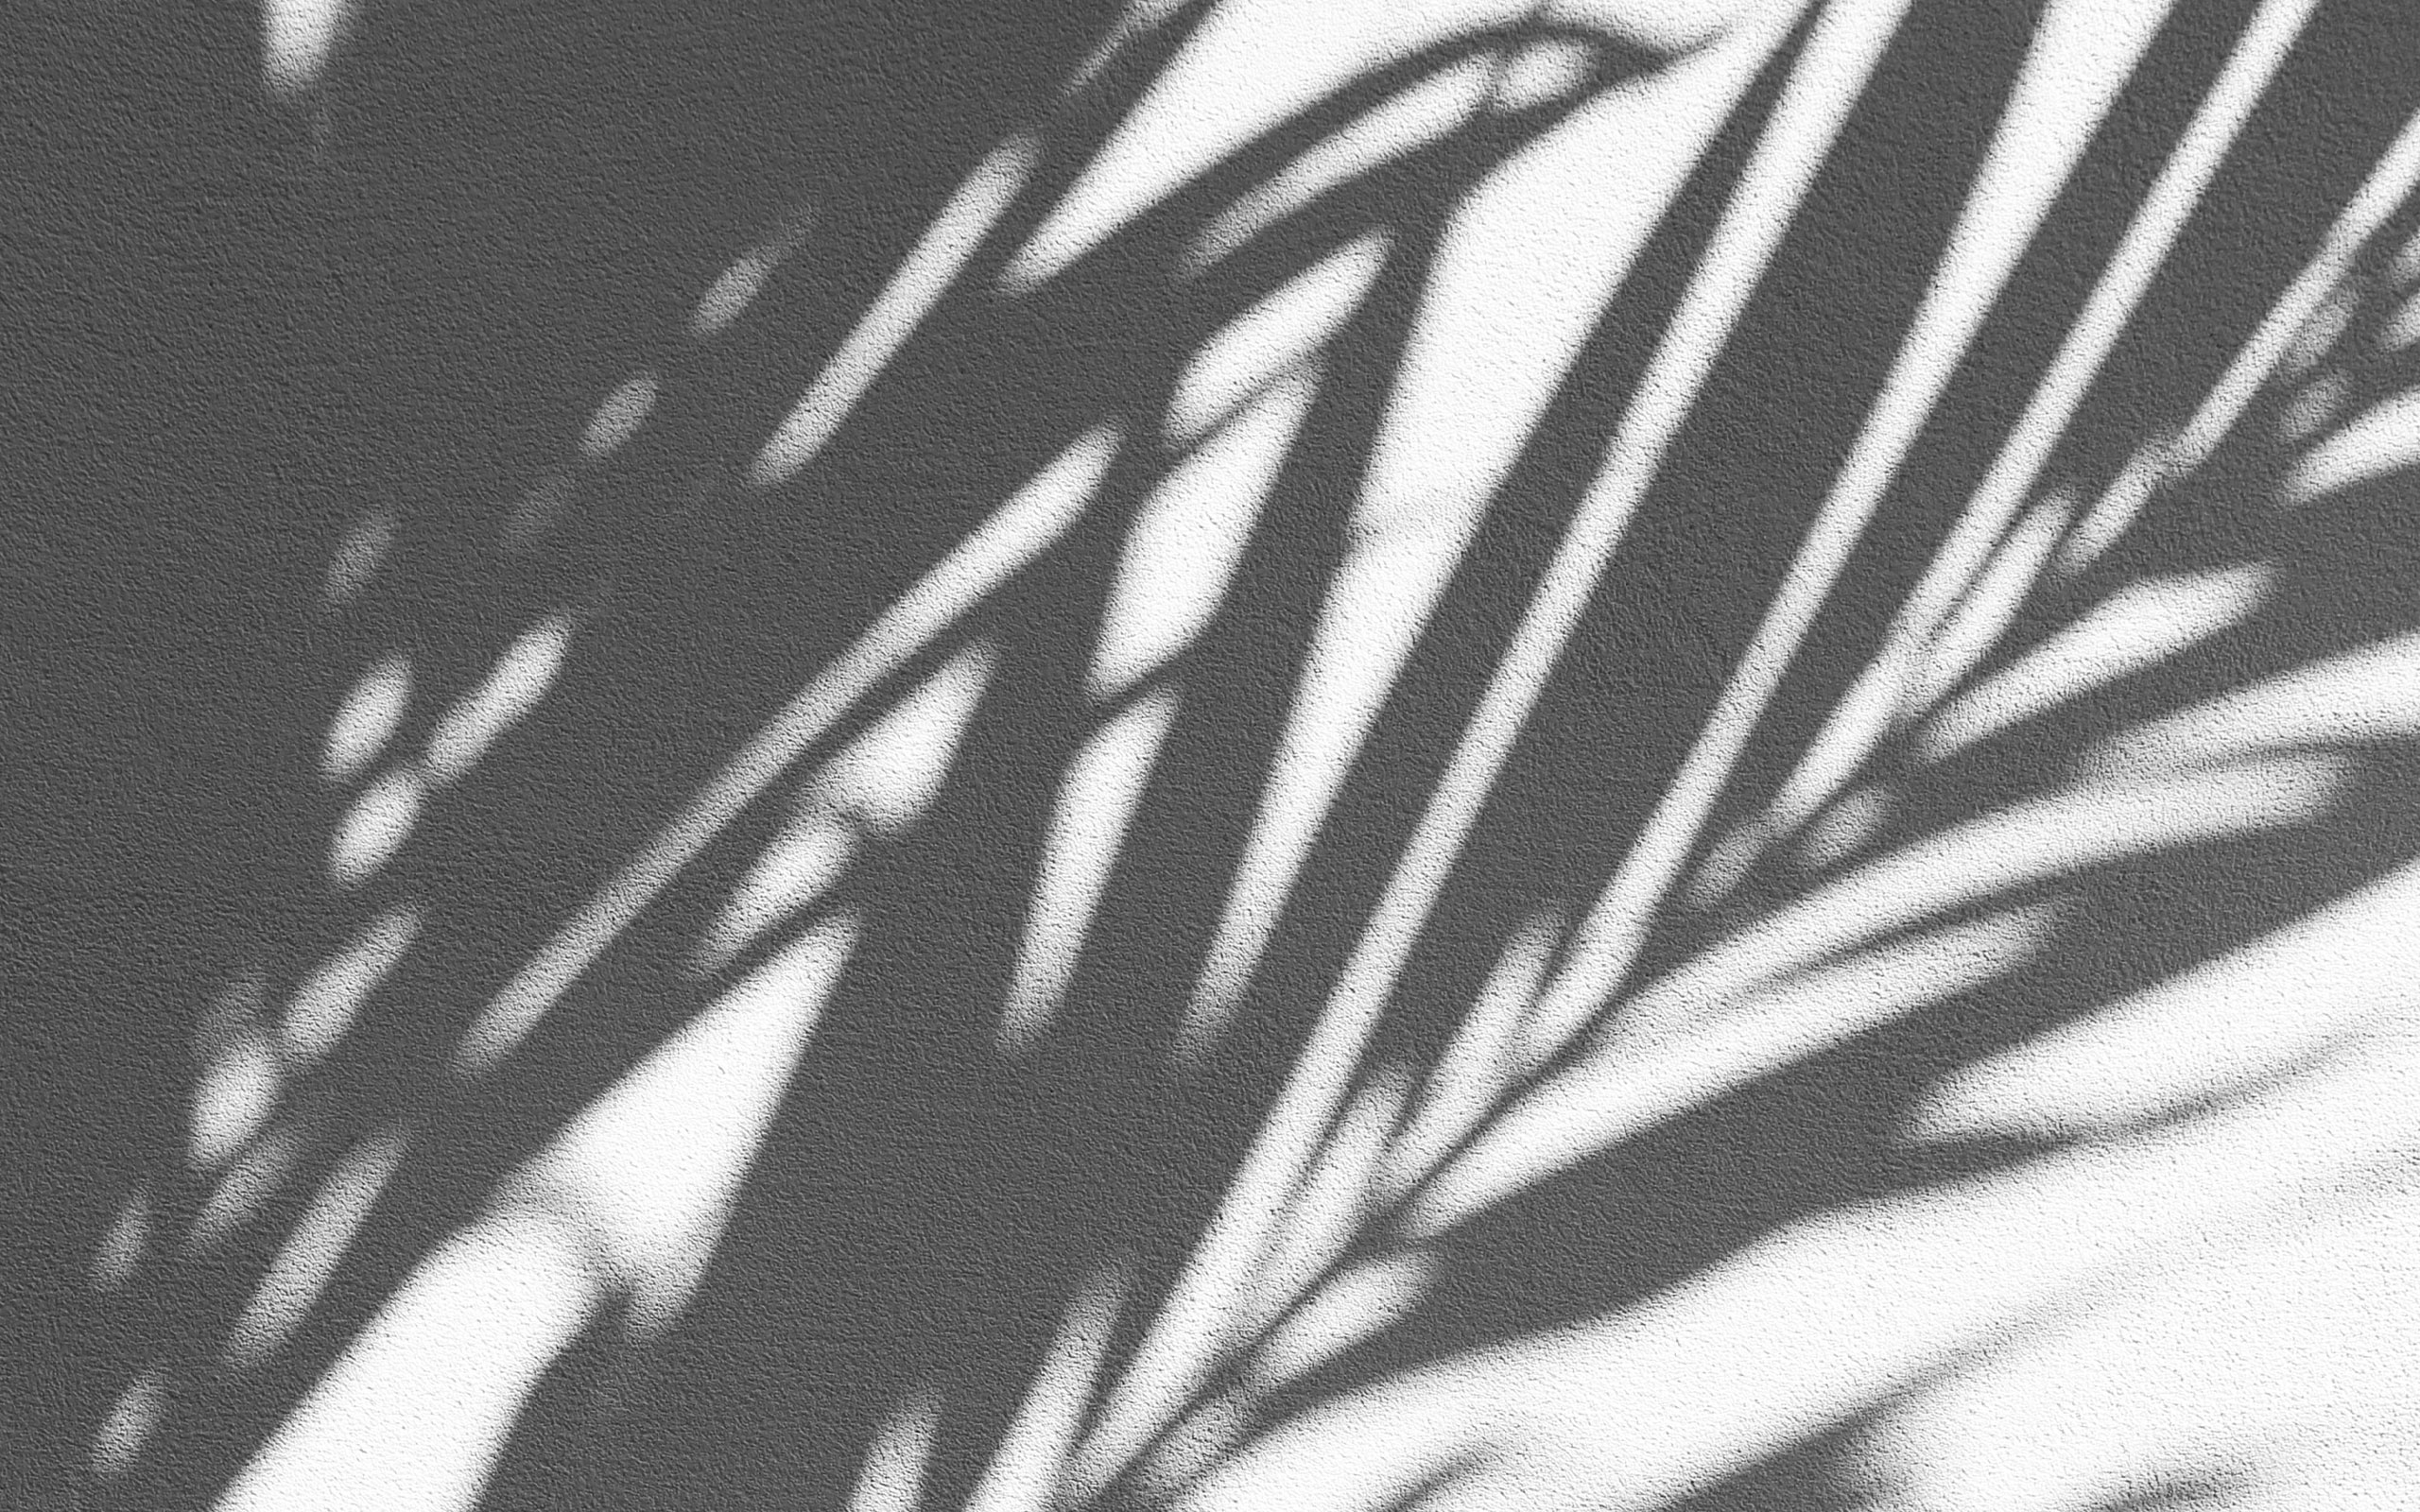 Shadow leaves